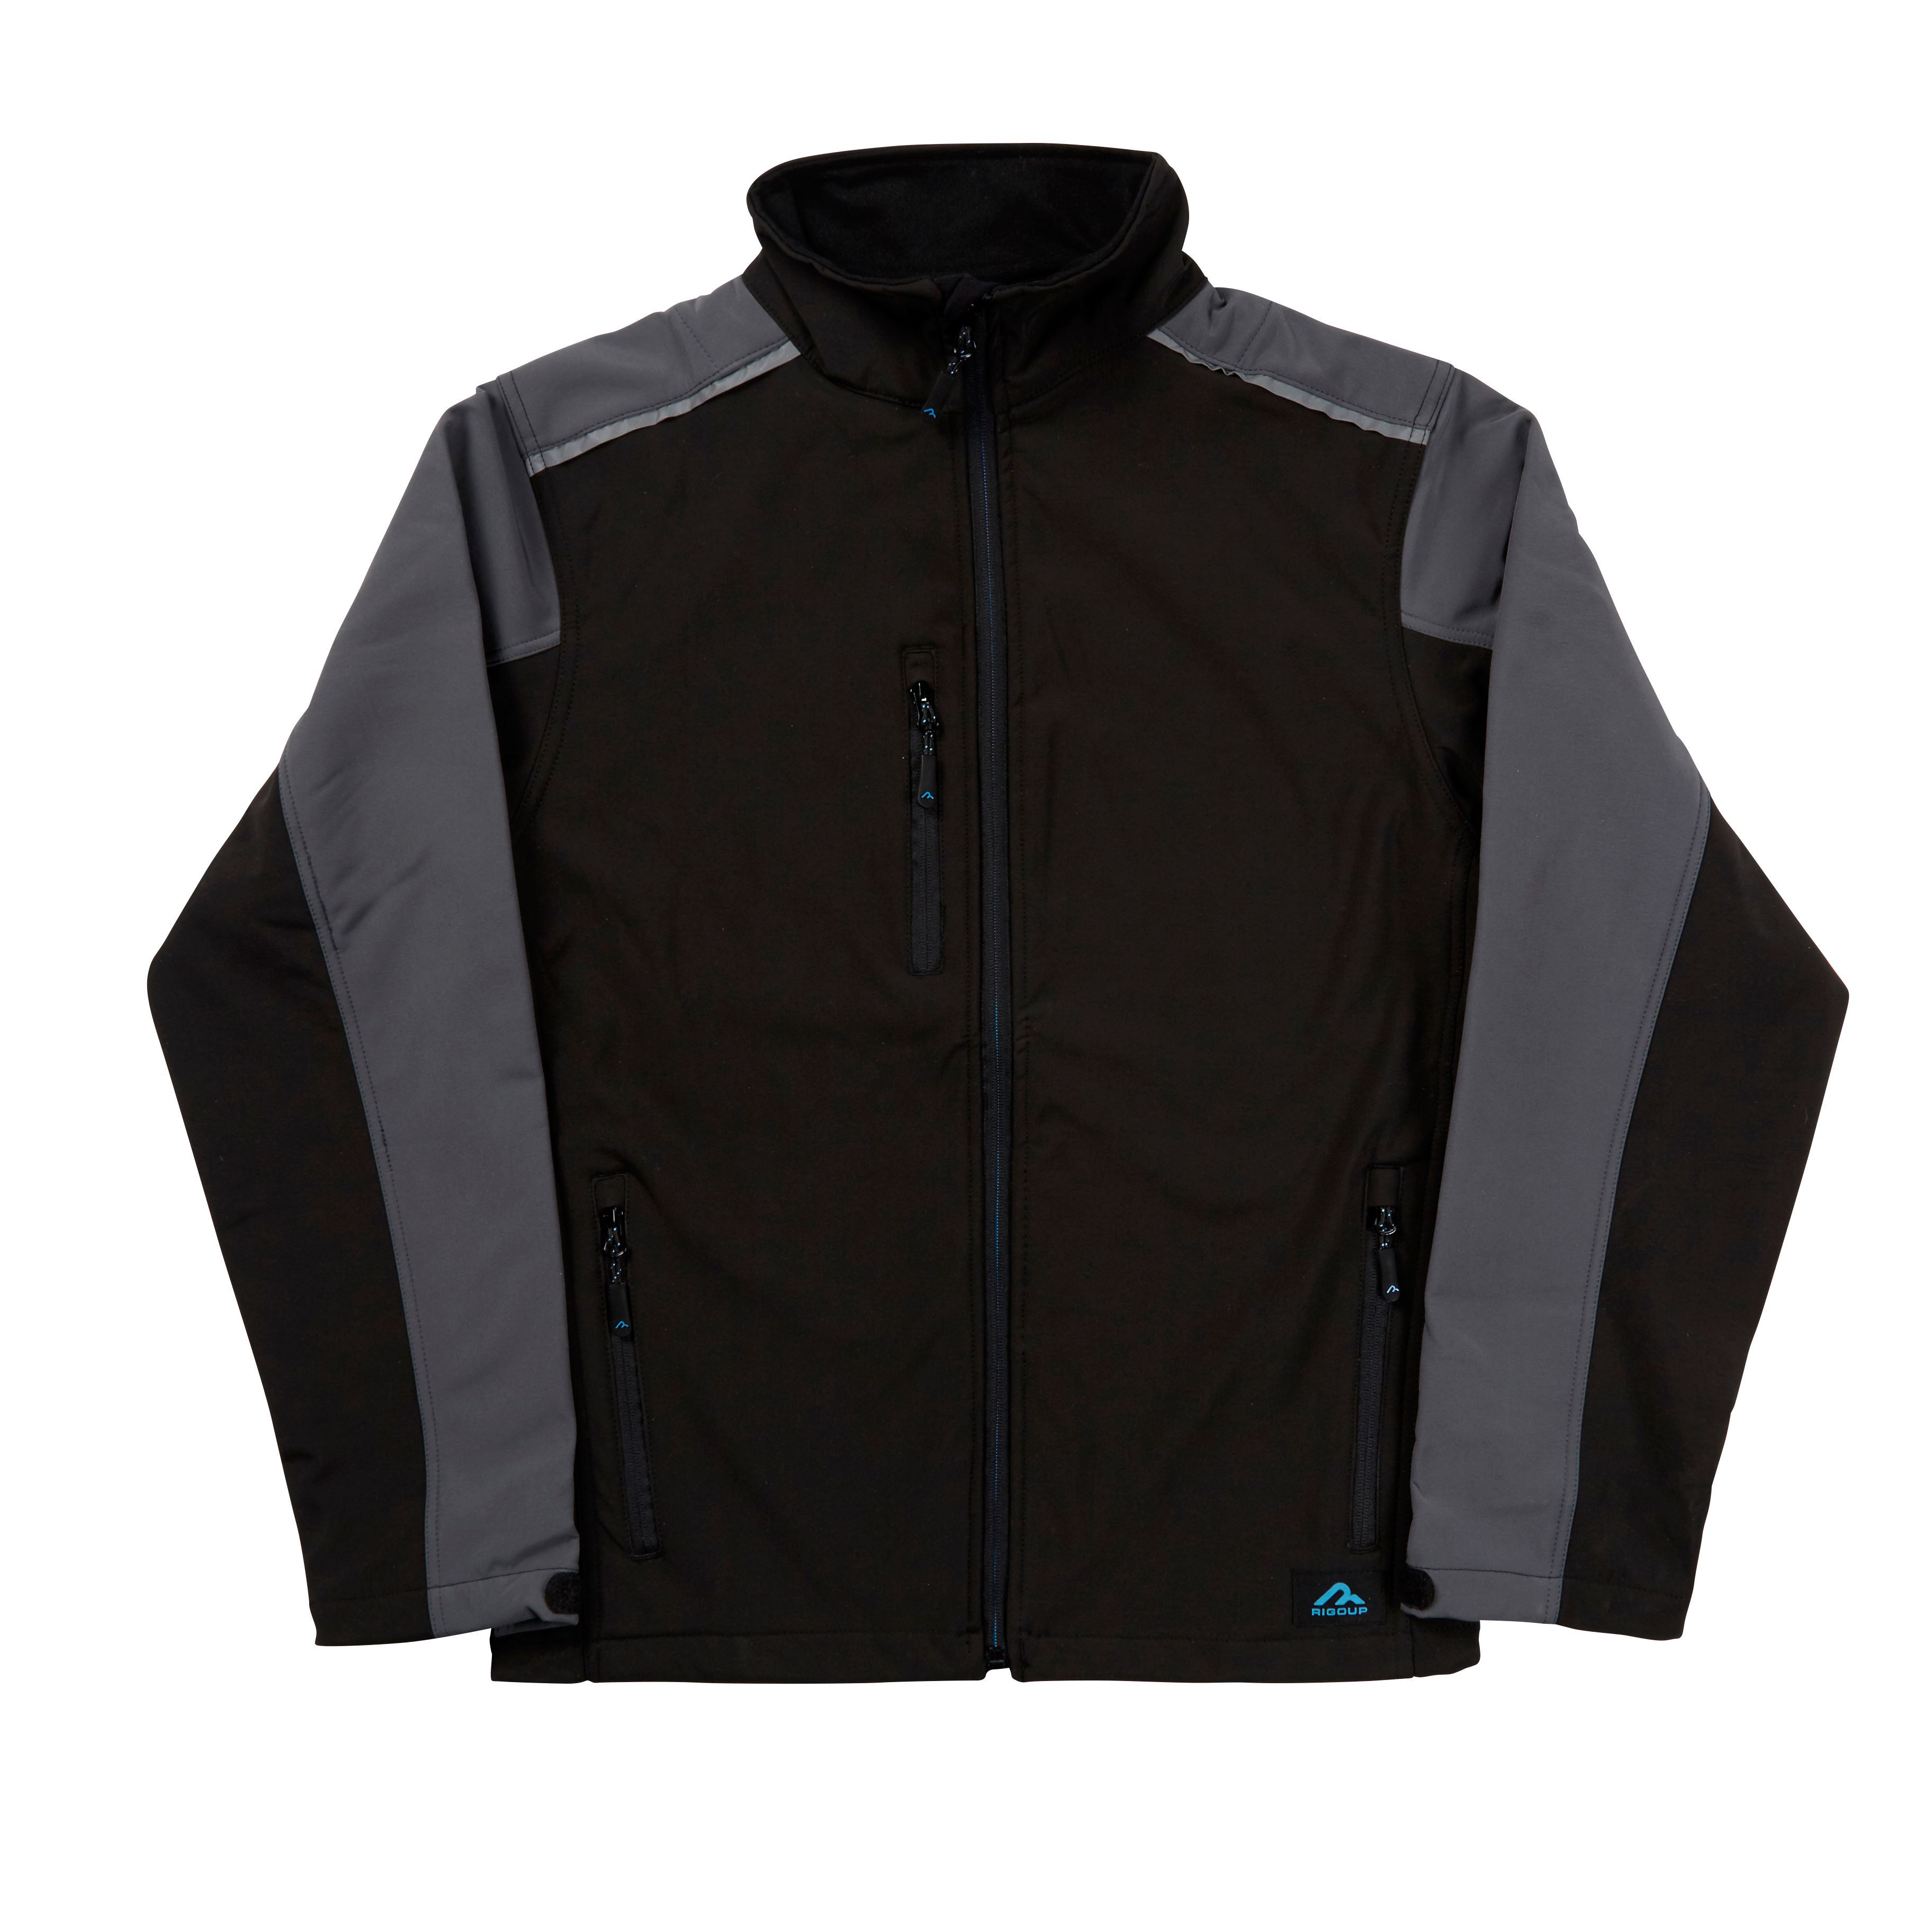 Rigour Black Waterproof Jacket X Small